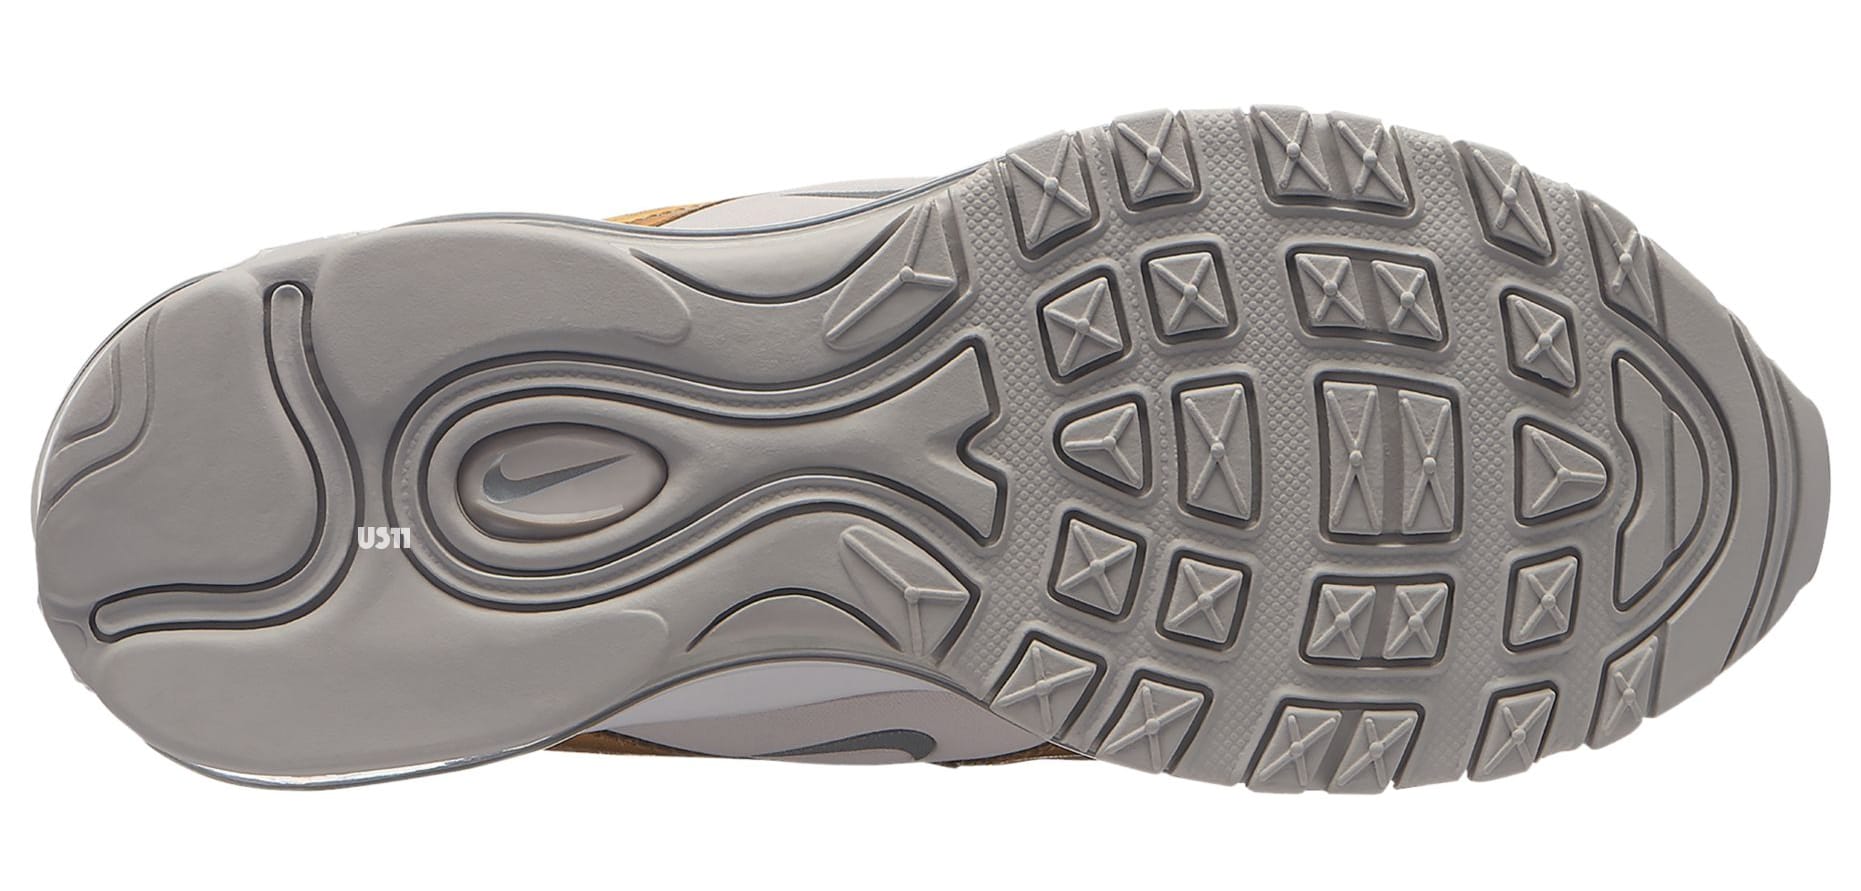 Nike Women's Air Max 97 SE Vast Grey/Metallic Silver-Metallic Gold